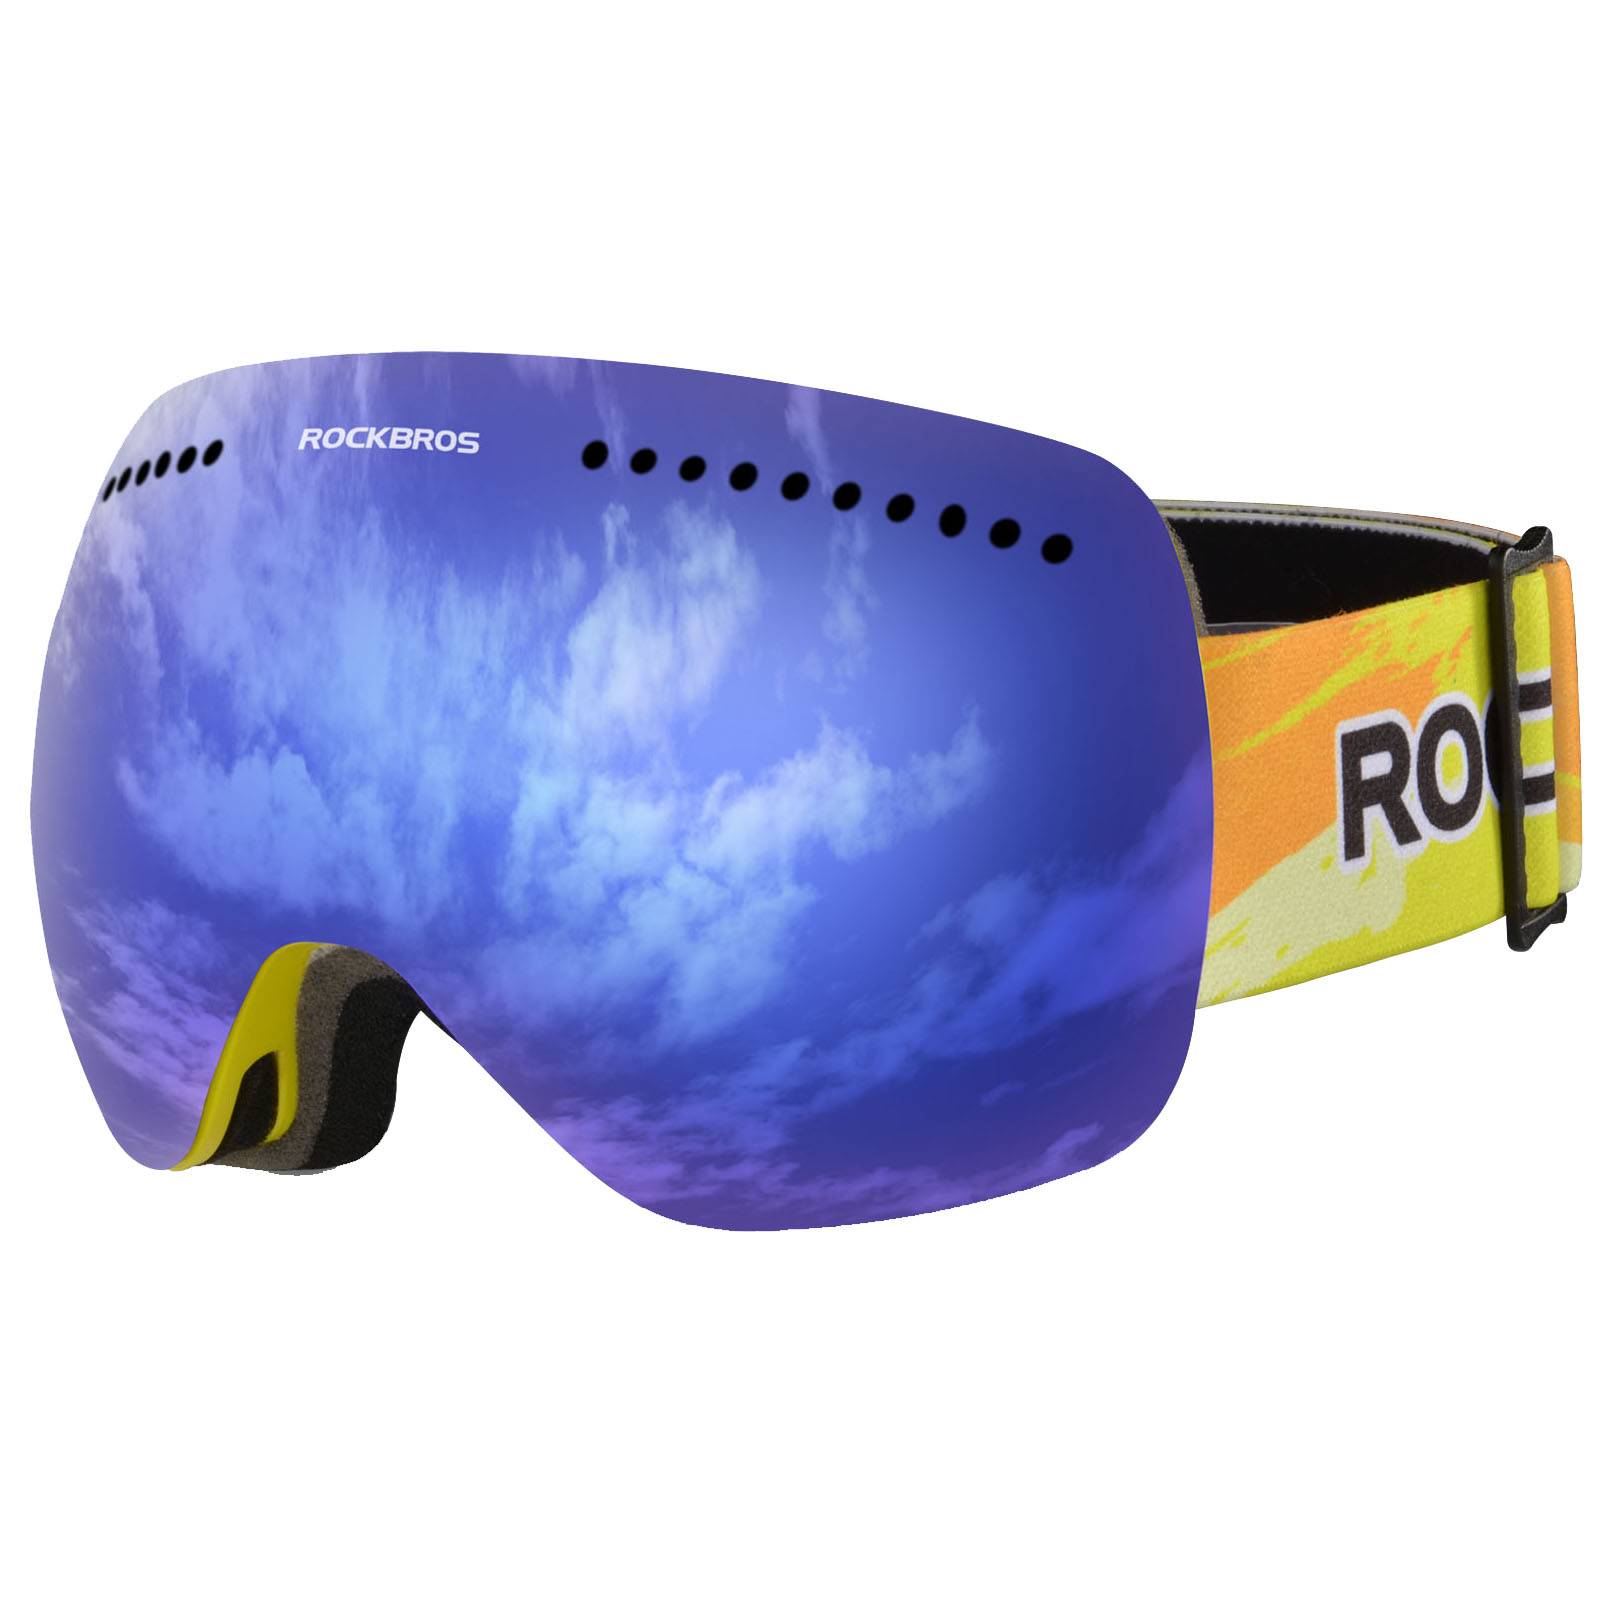 ROCKBROS-EU ROCKBROS – women and goggles protection for UV400 men ski anti-fog g ski